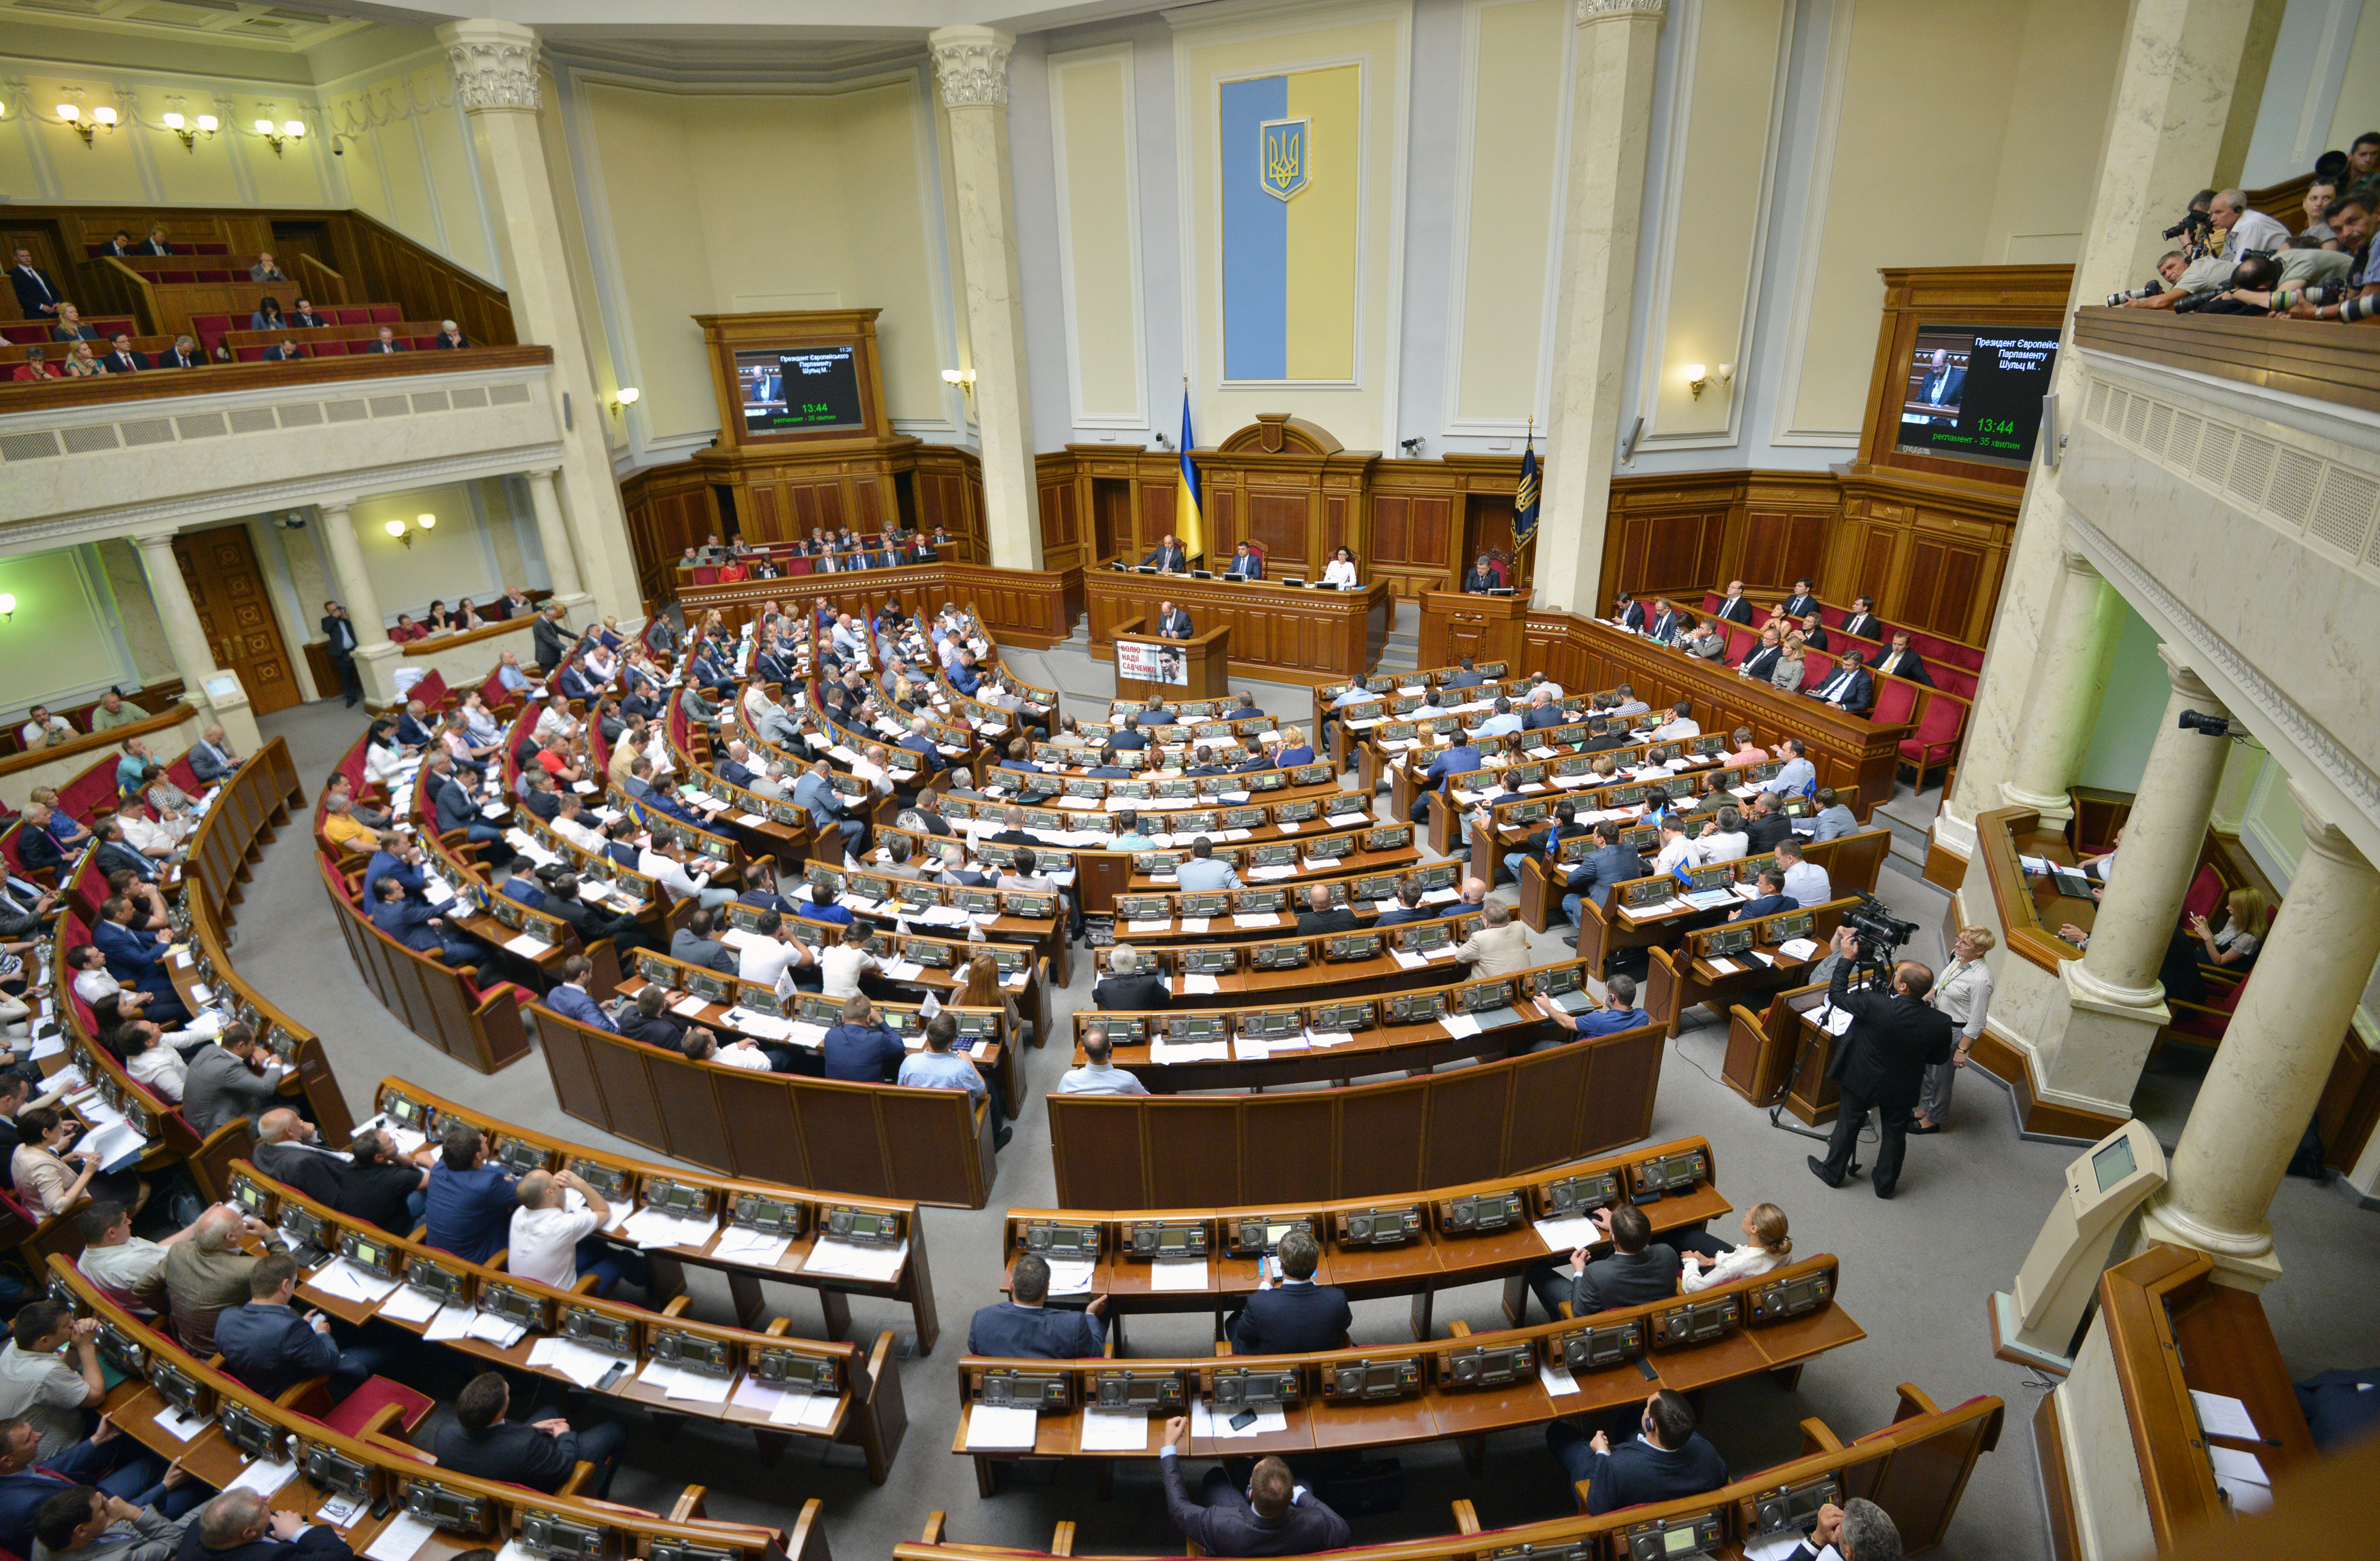 Verkhovna Rada of Ukraine (photo credit: Martin Schulz/flickr)